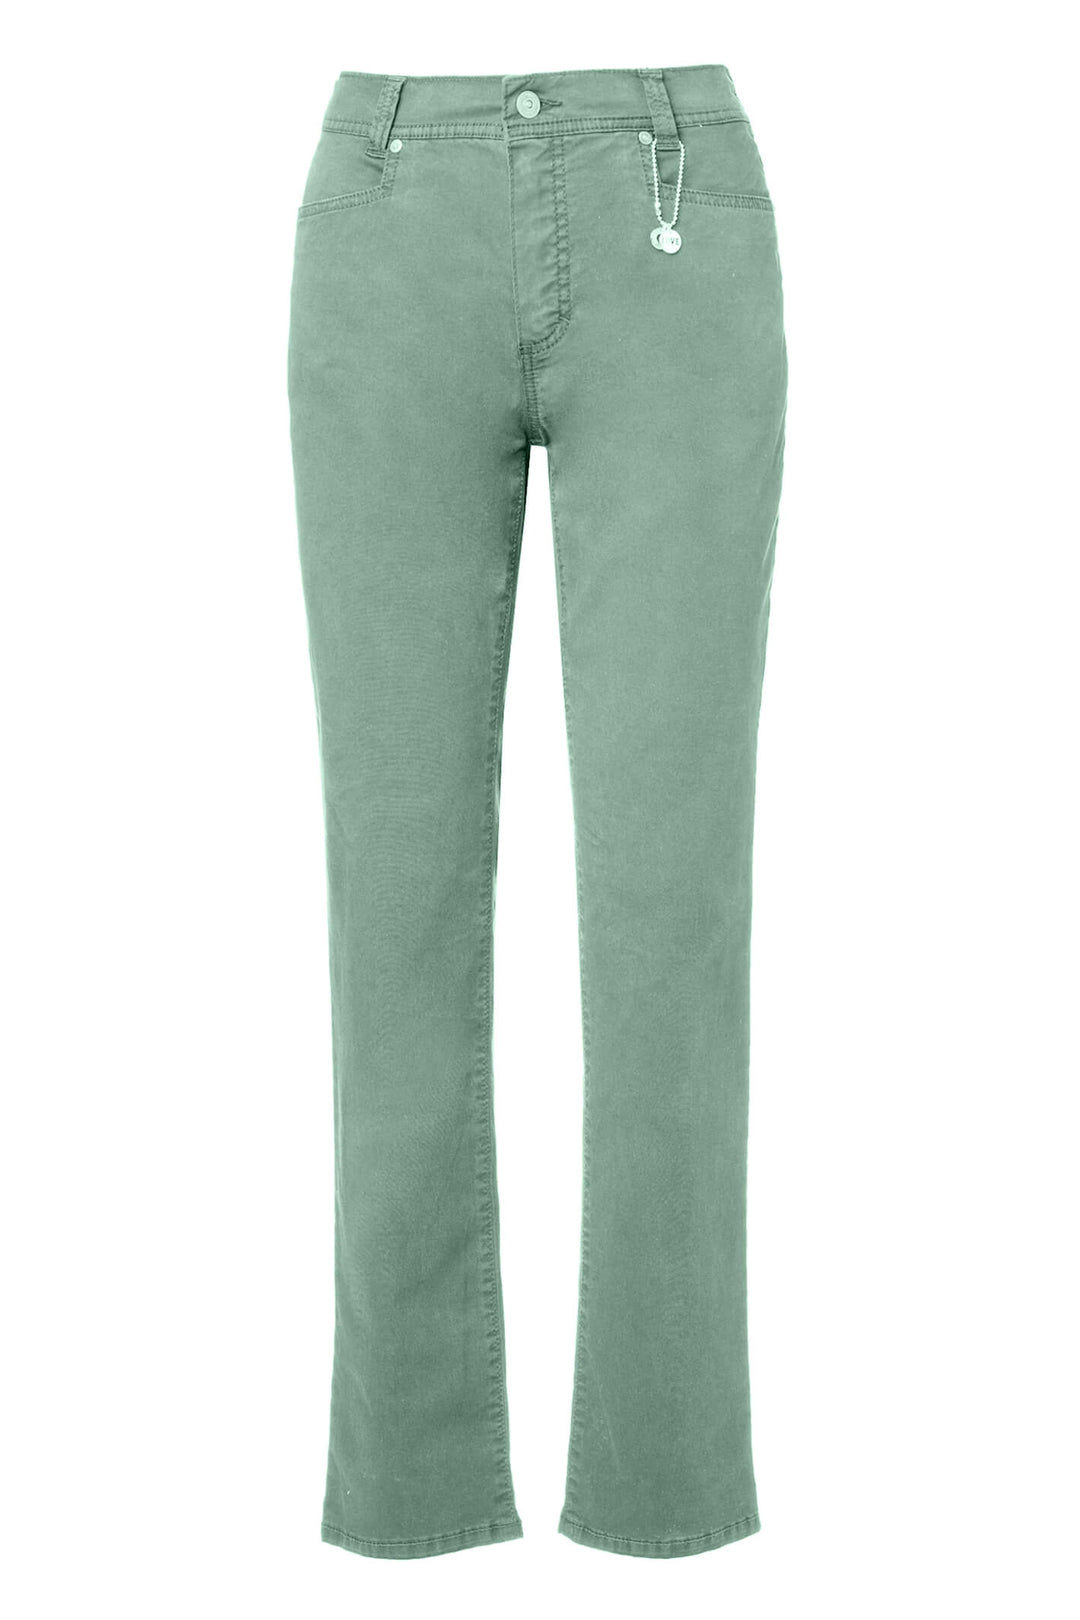 Anna Montana Dora 4010 Mint Green 130 Comfort Fit Jeans - Shirley Allum Boutique